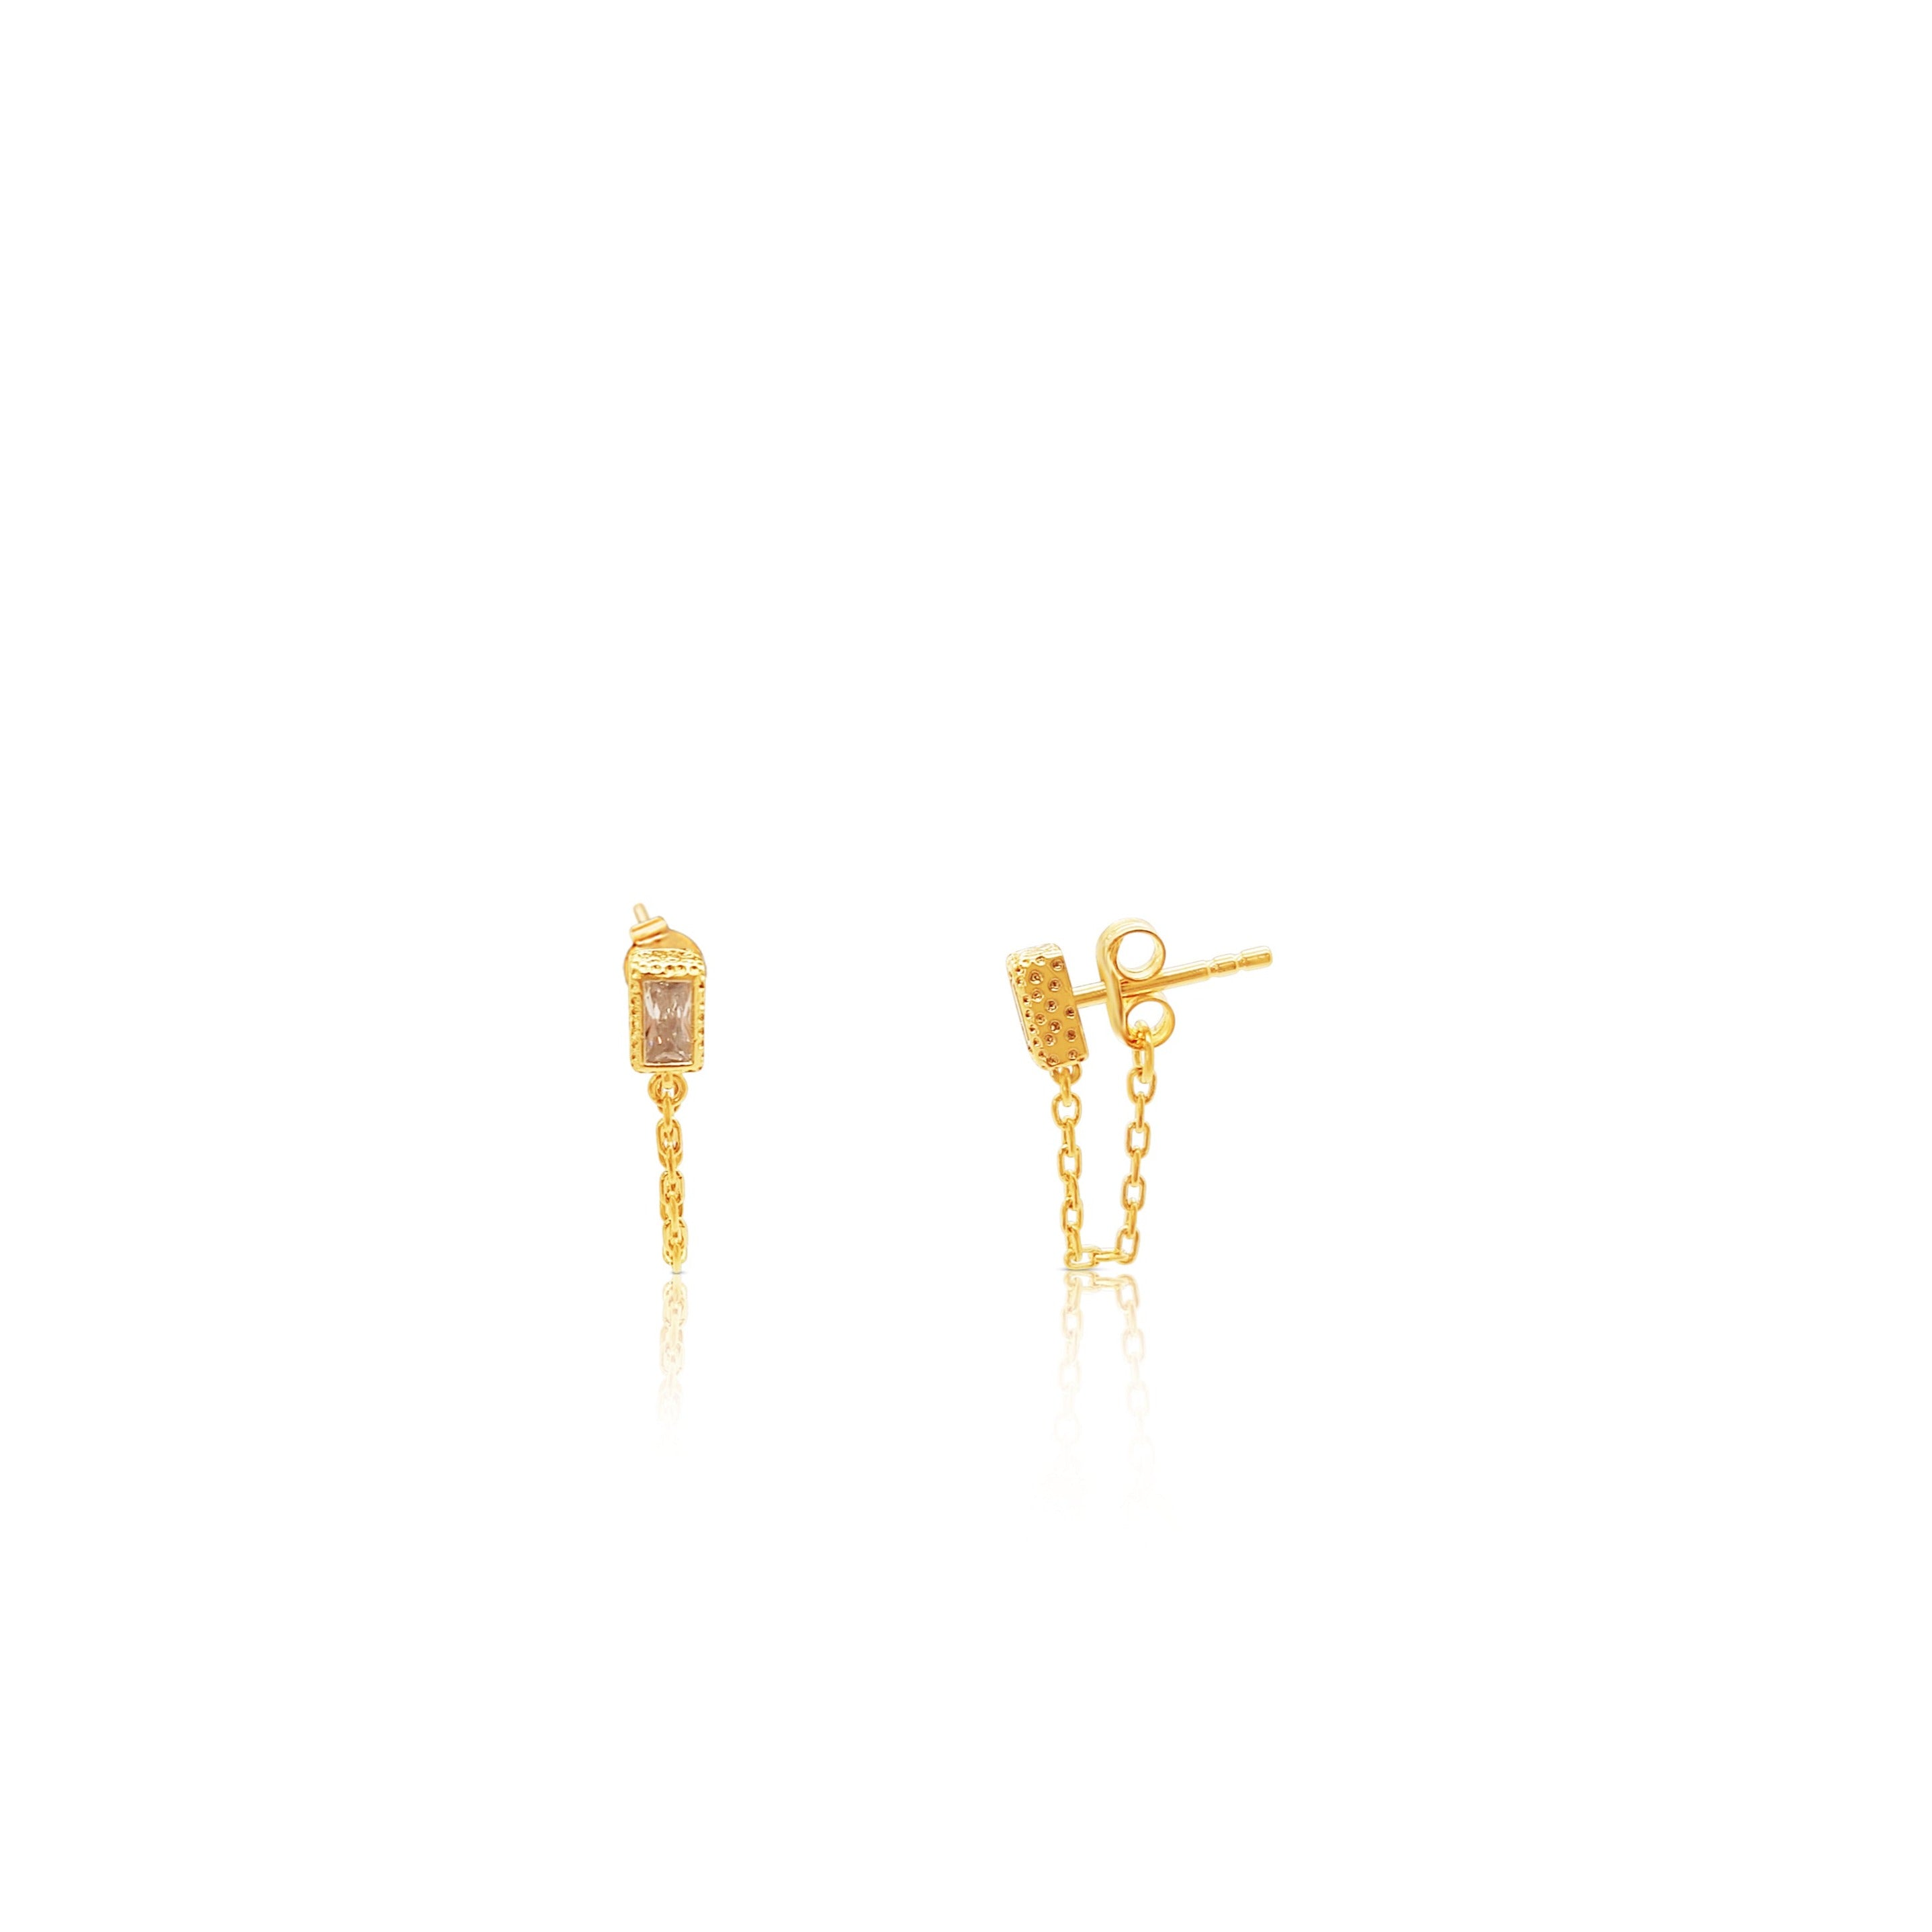 Corsica earrings